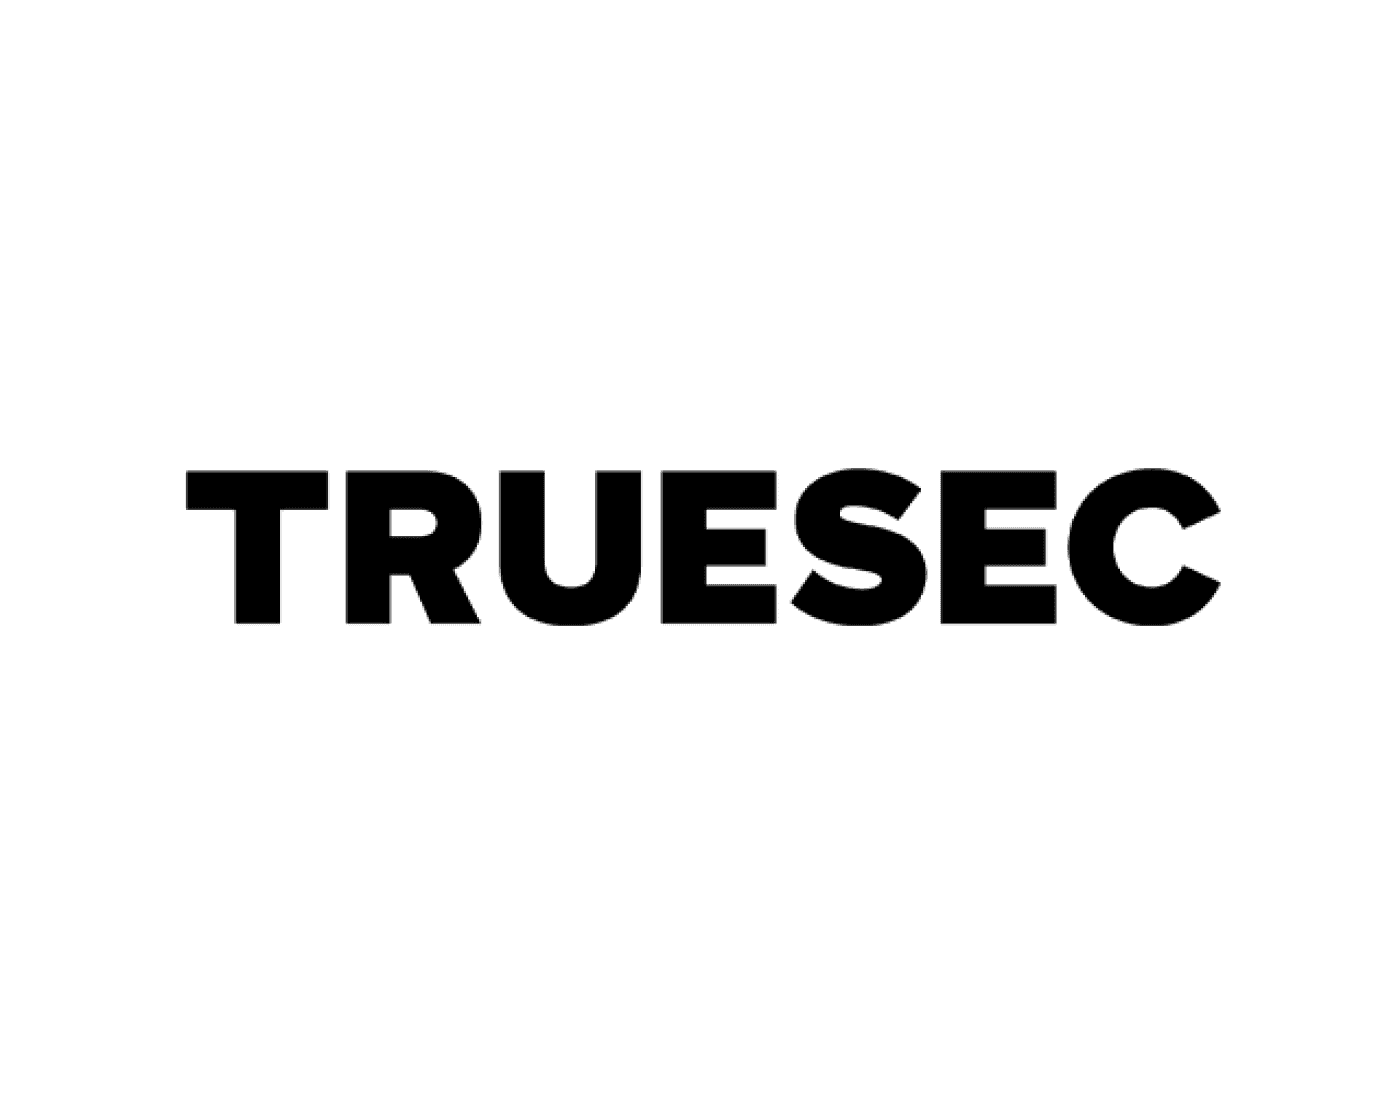 truesec-640x500-01.png